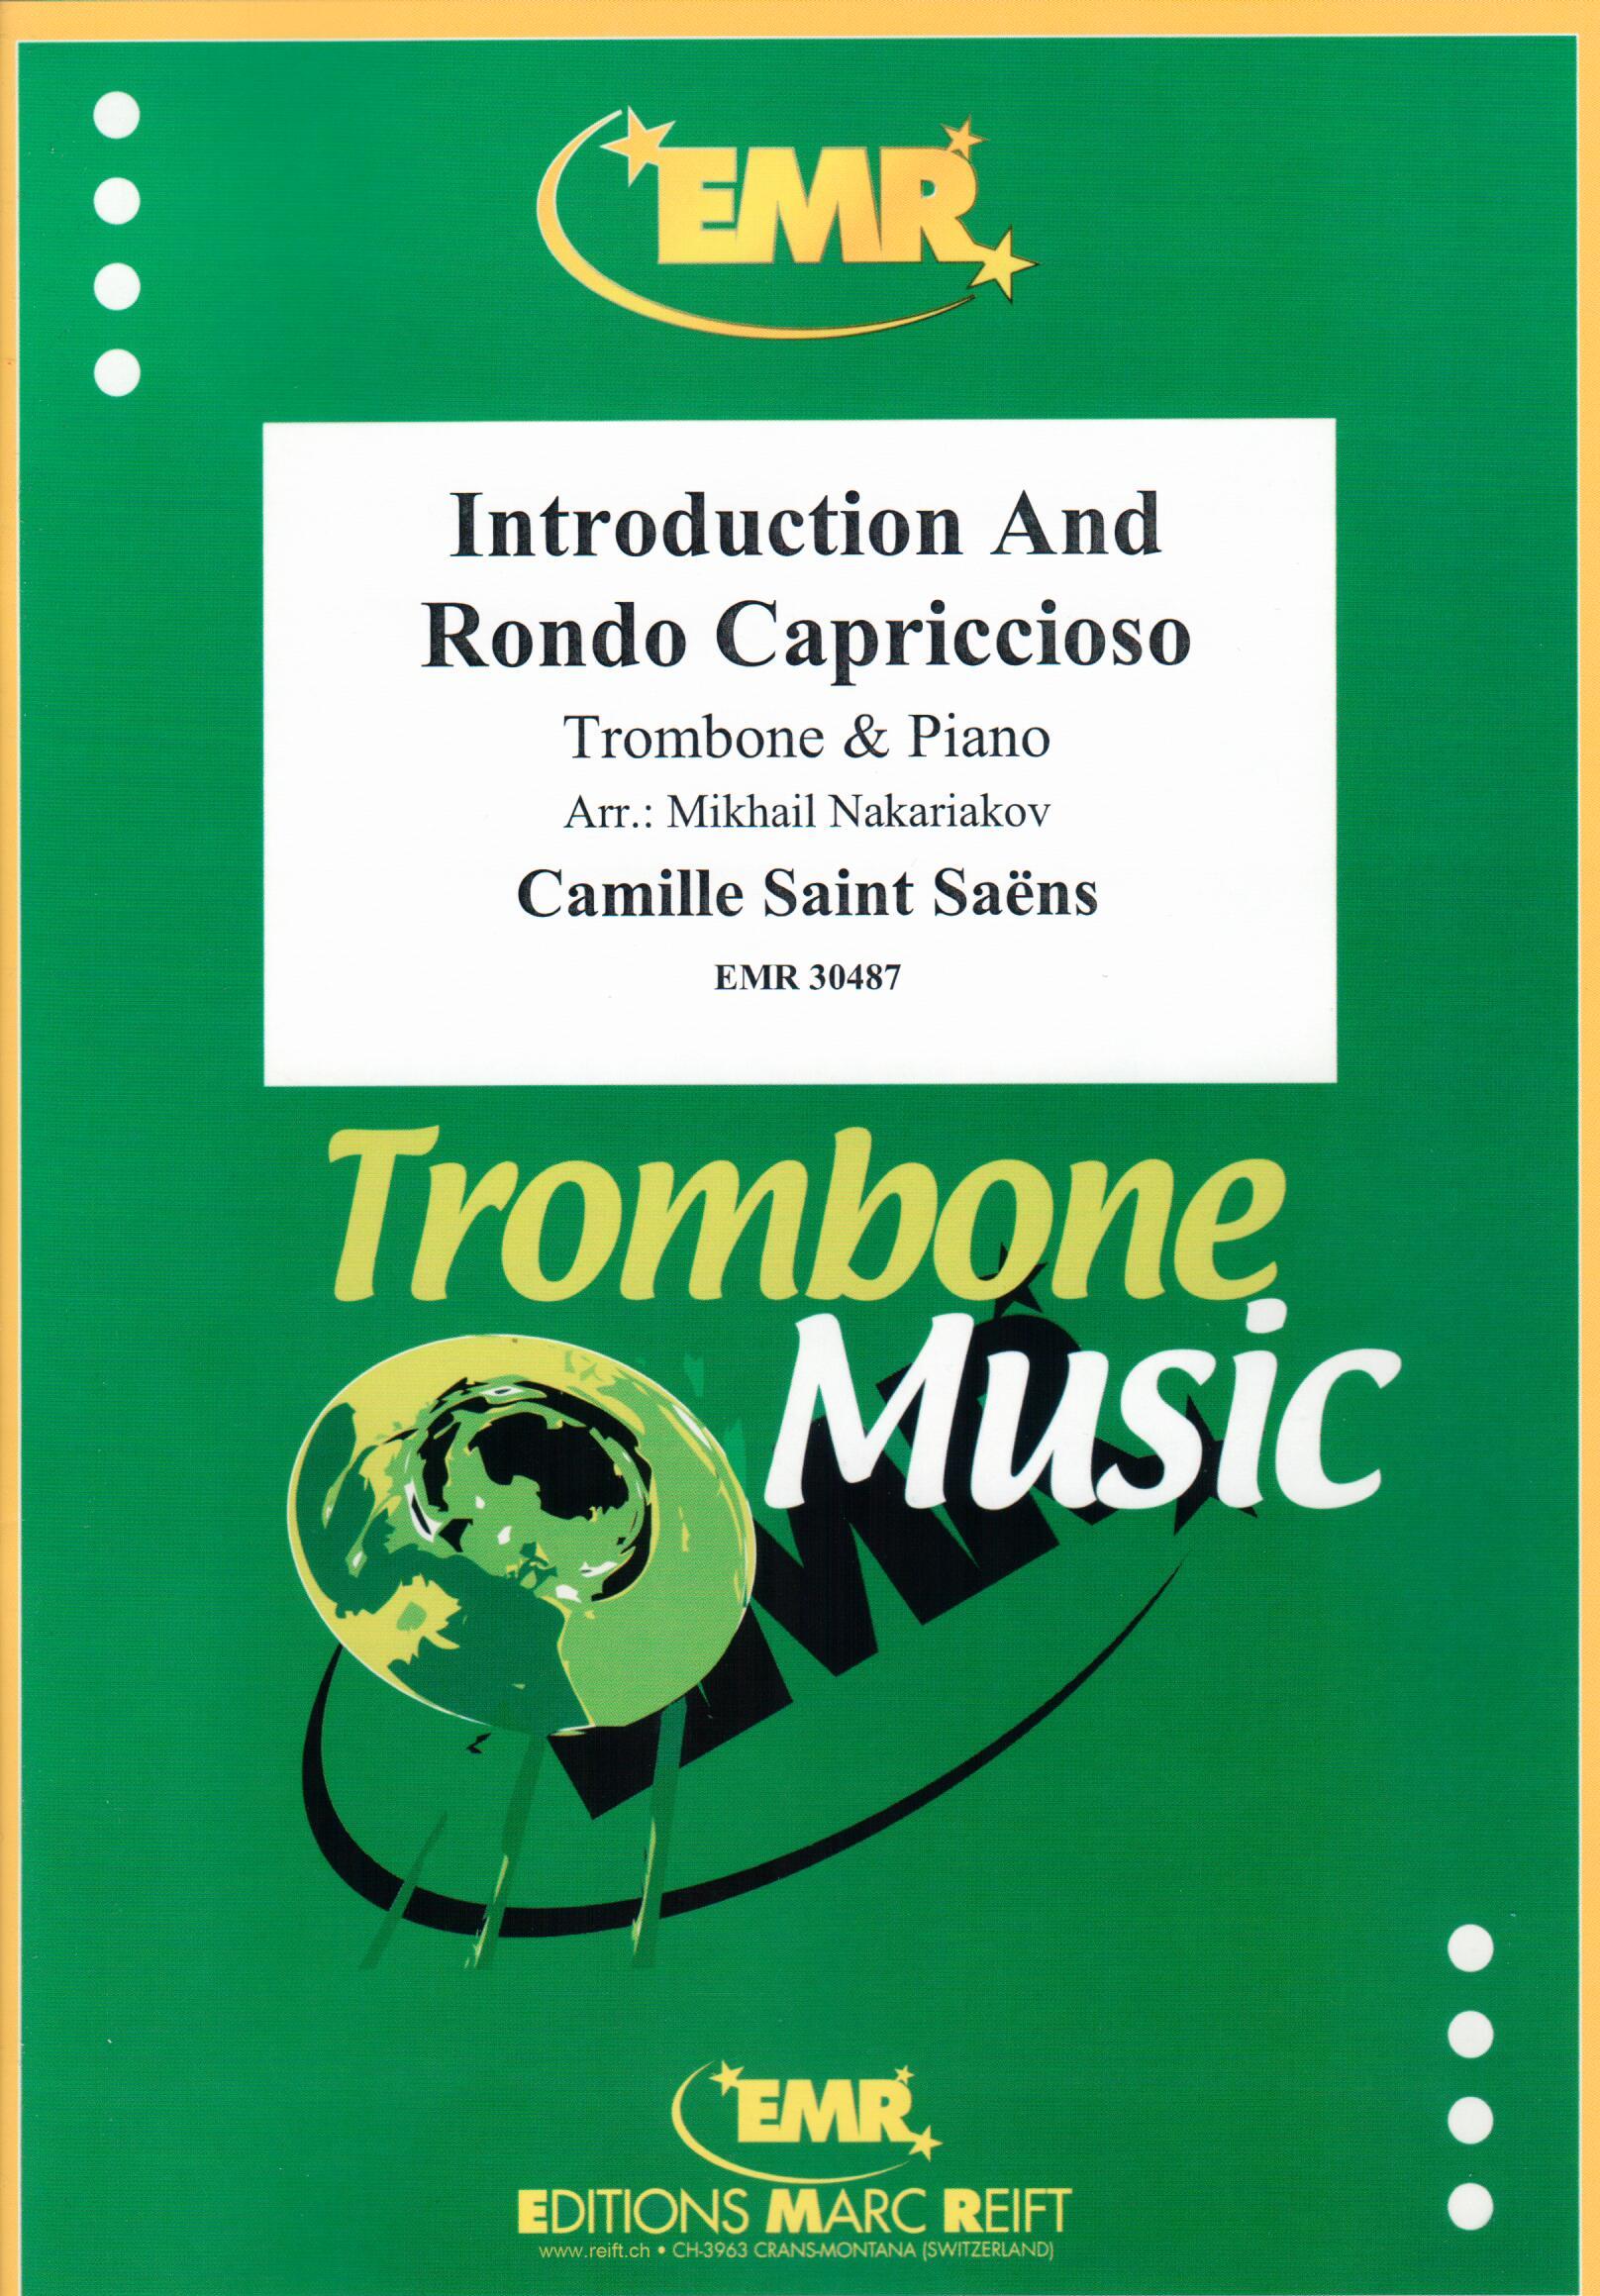 INTRODUCTION AND RONDO CAPRICCIOSO, SOLOS - Trombone